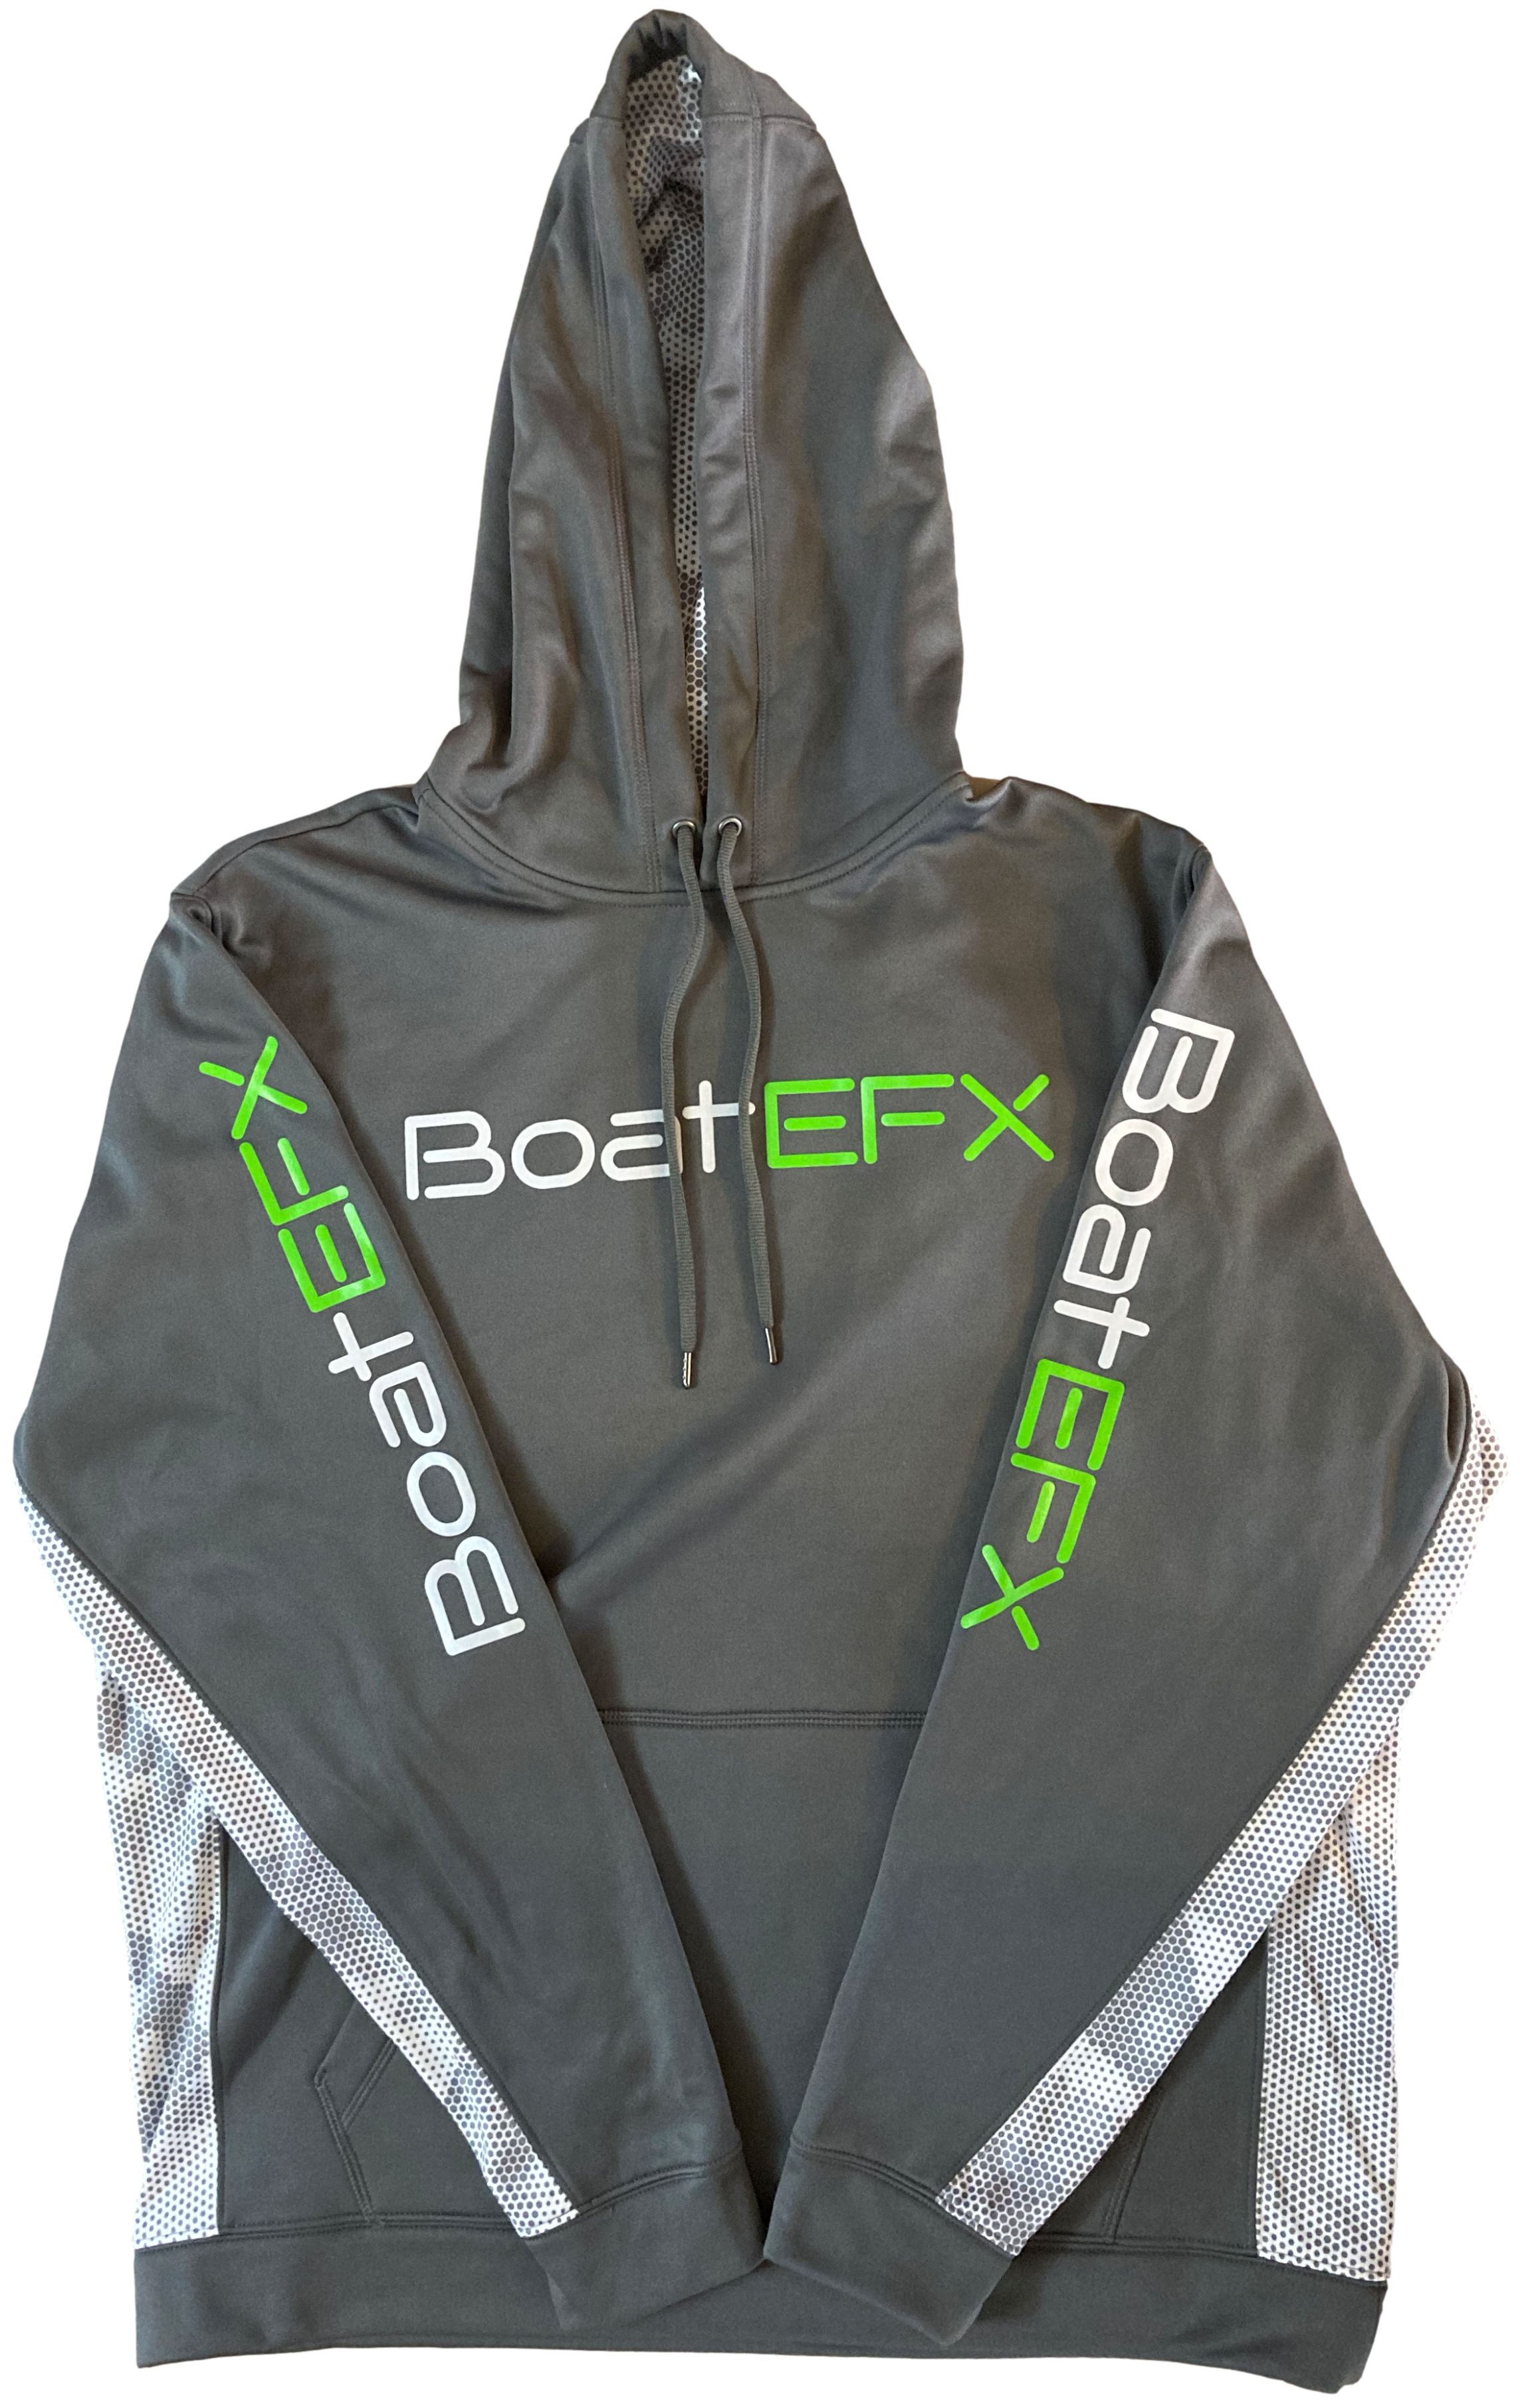 BoatEFX Hoodie - BoatEFX